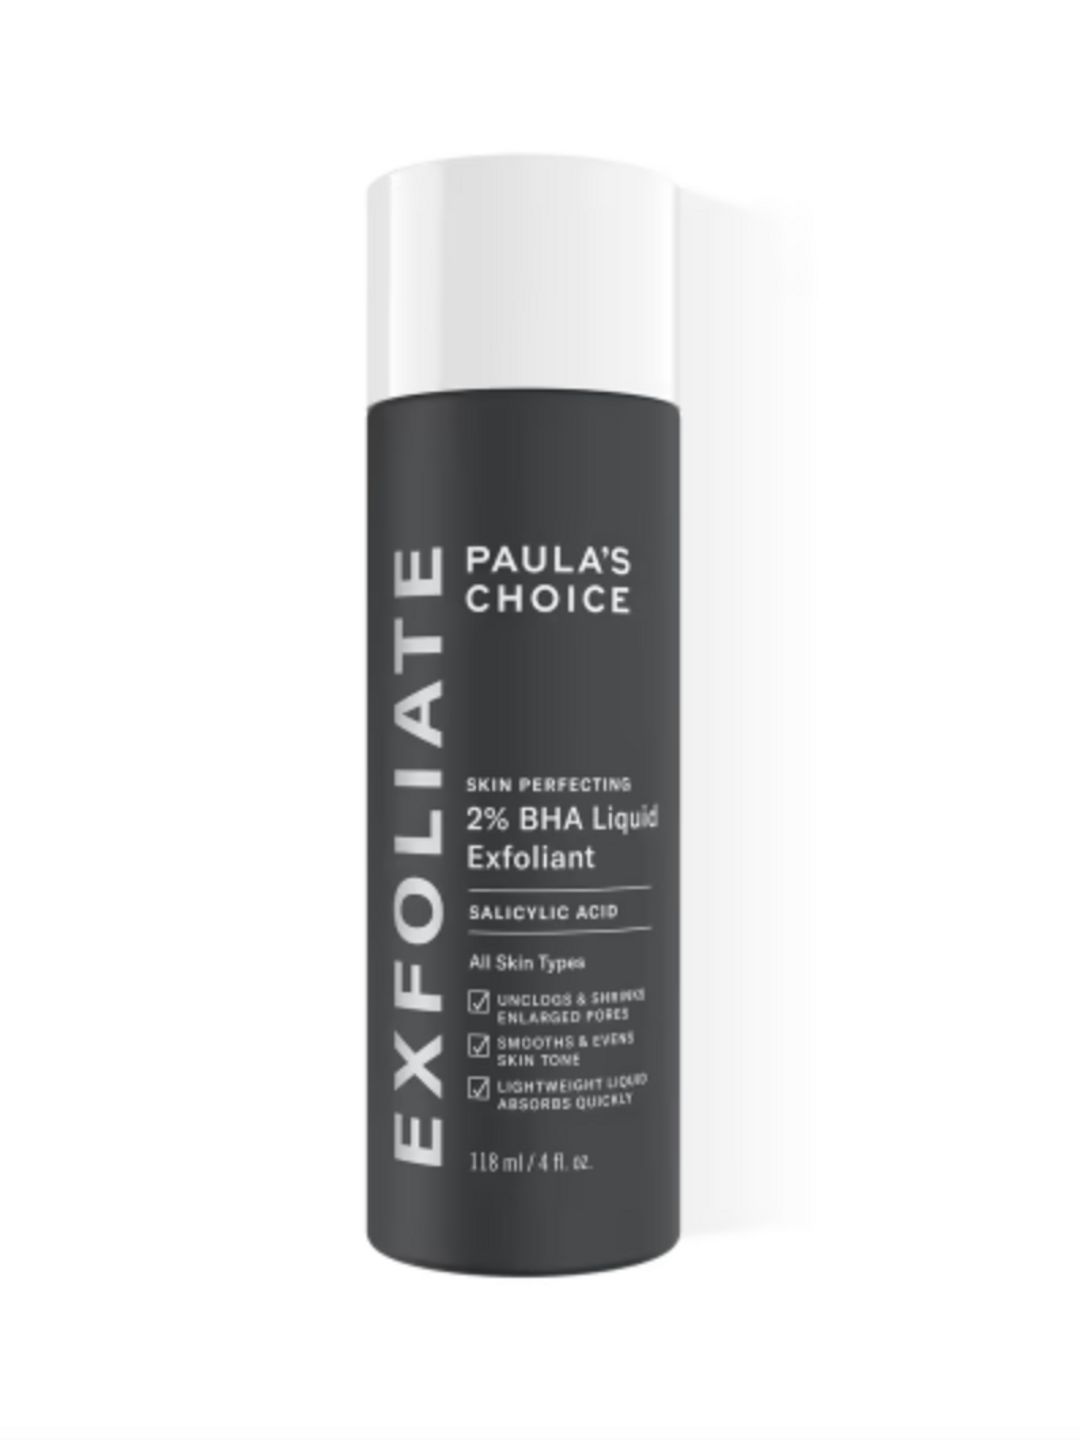 Skin Perfecting 2% BHA Liquid Exfoliant - Paula's Choice 